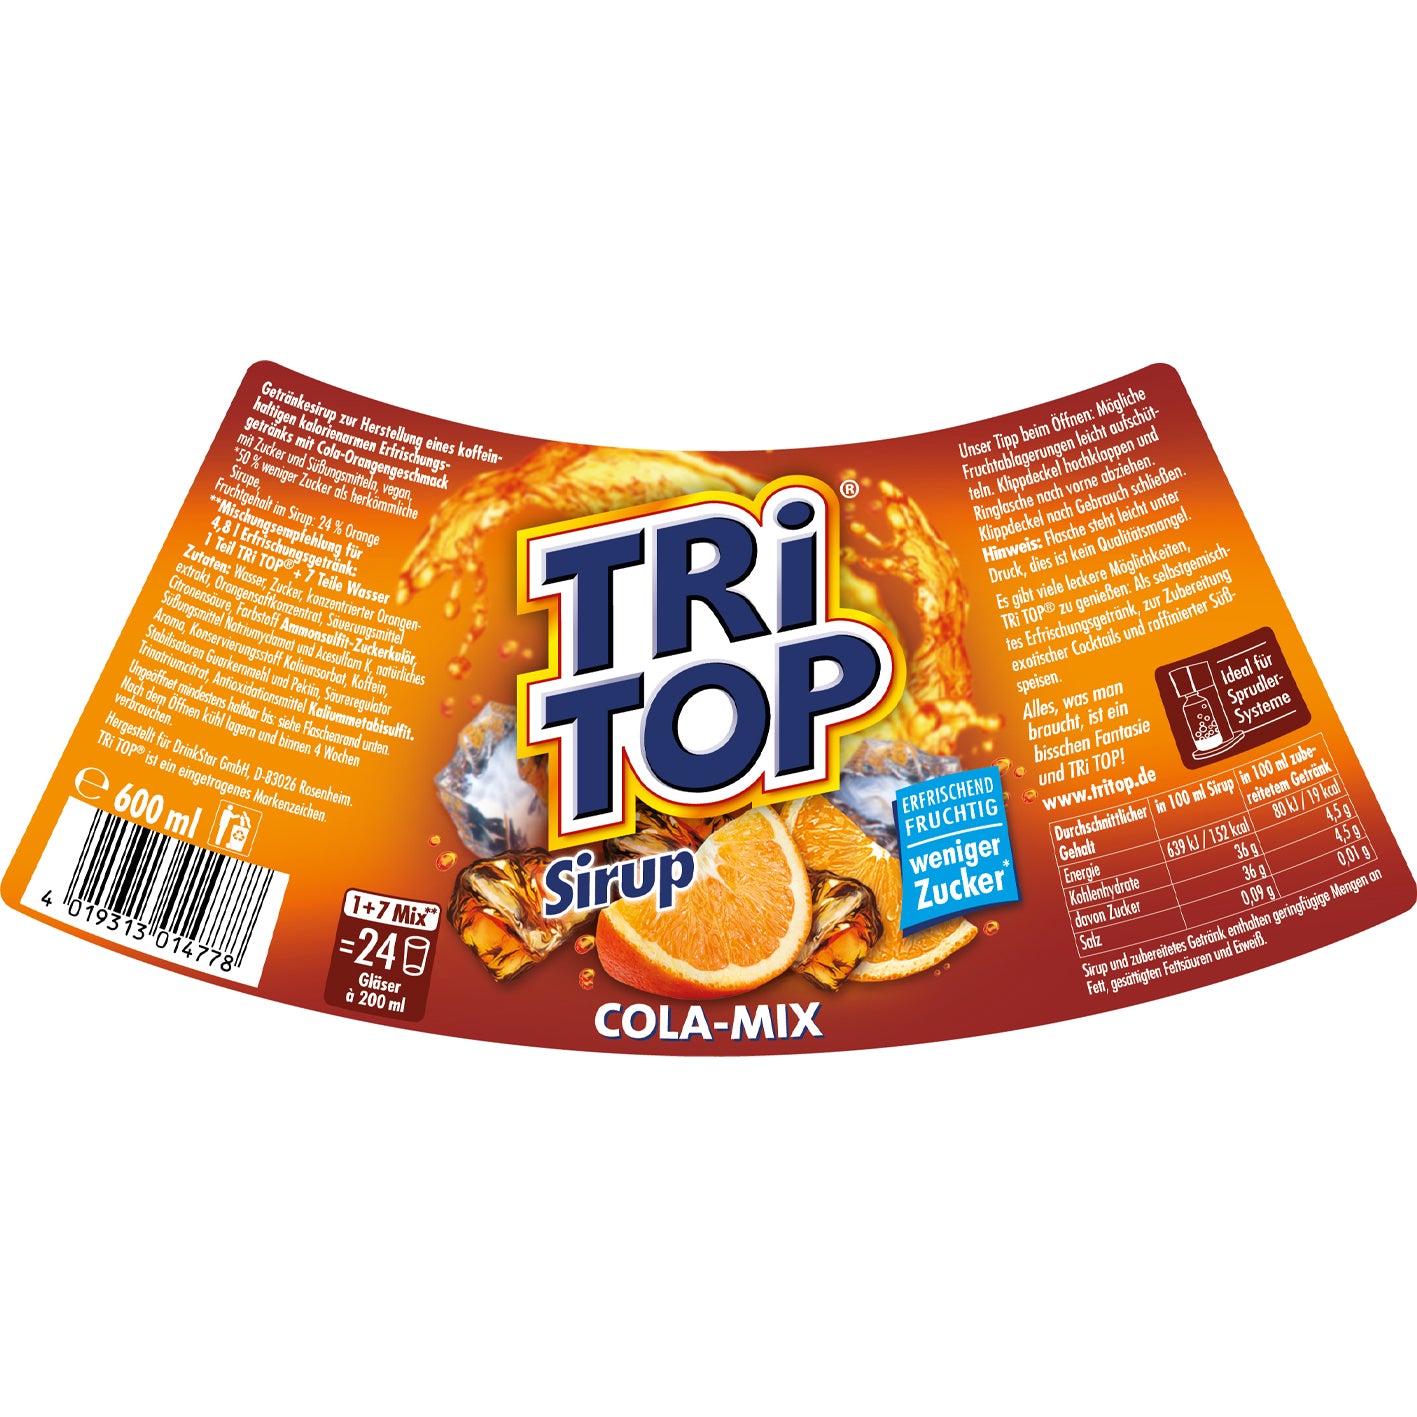 TRi TOP Sirup Orange-Cola Mix 6er-Set - 6x 600 ml